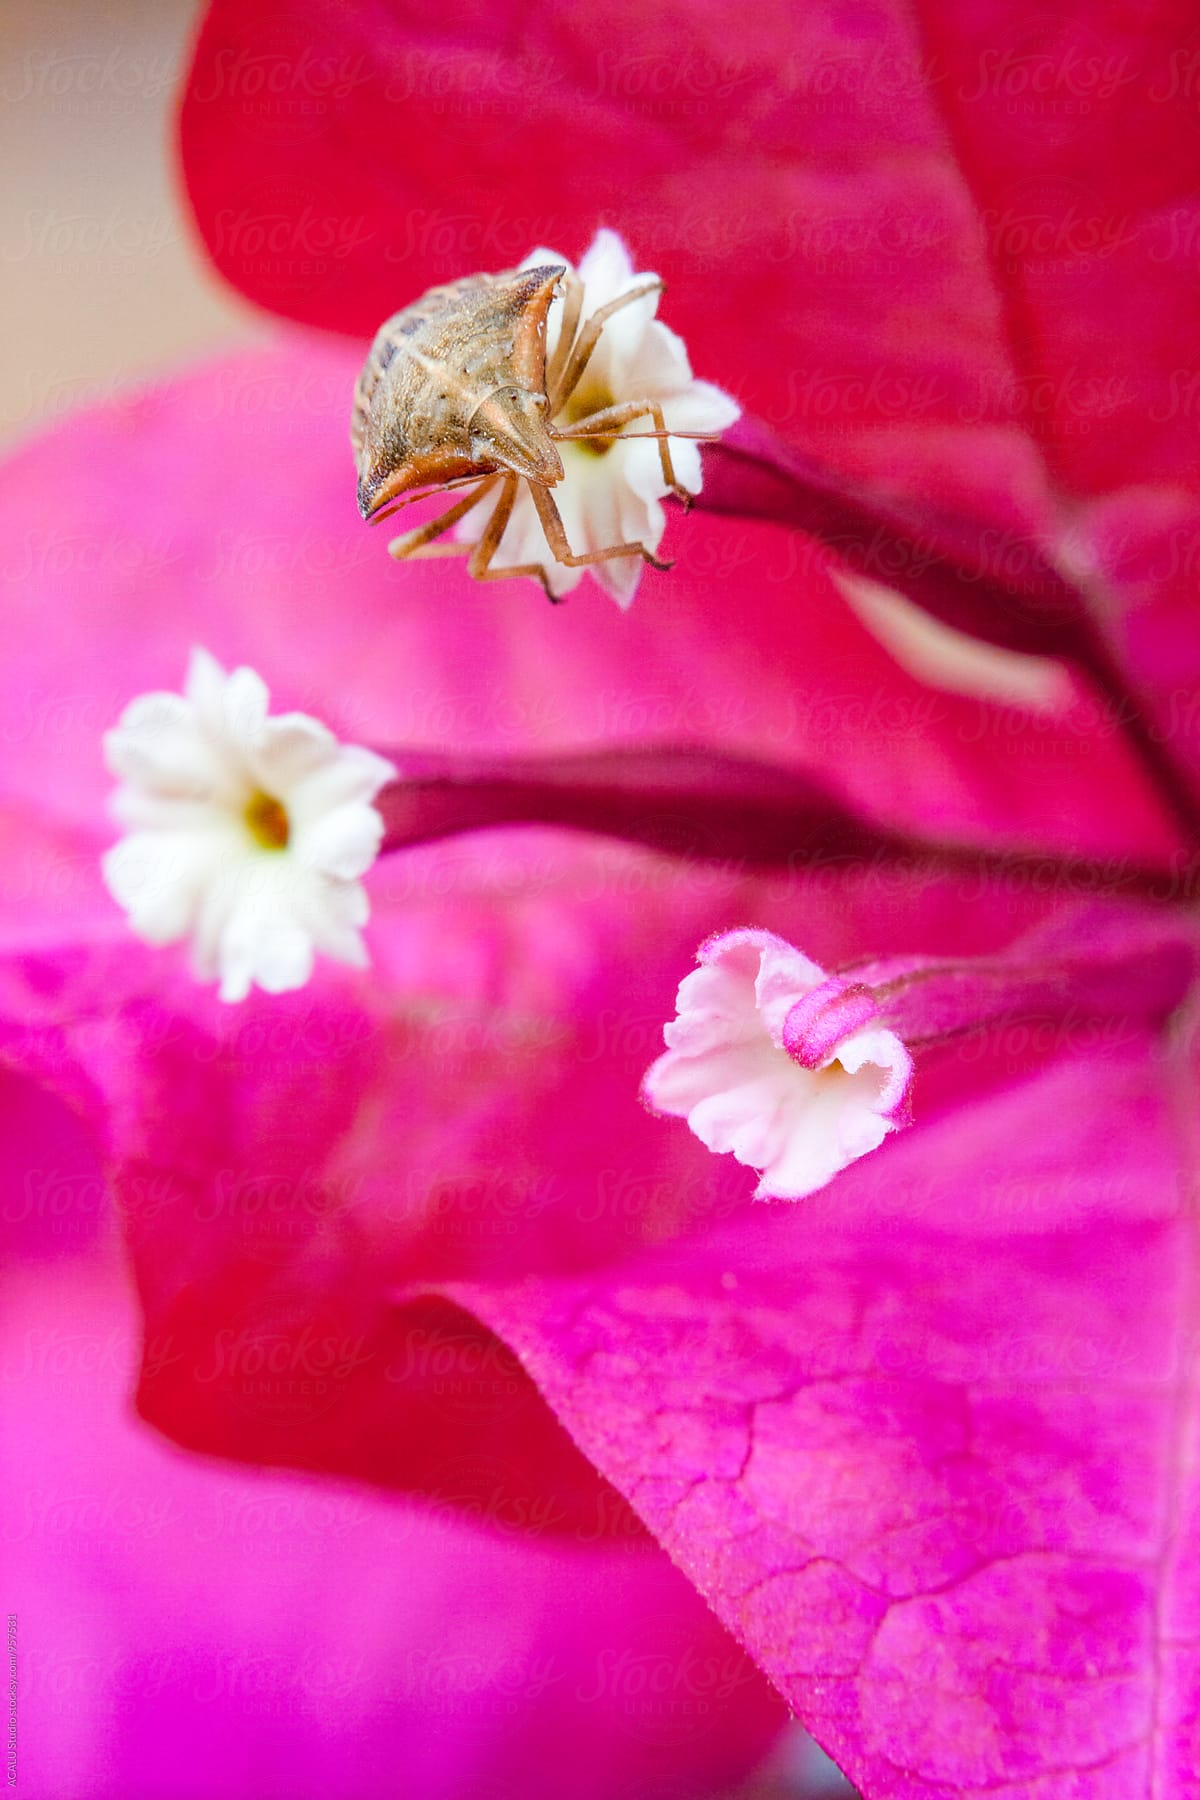 Bedbug perched on a pink flower